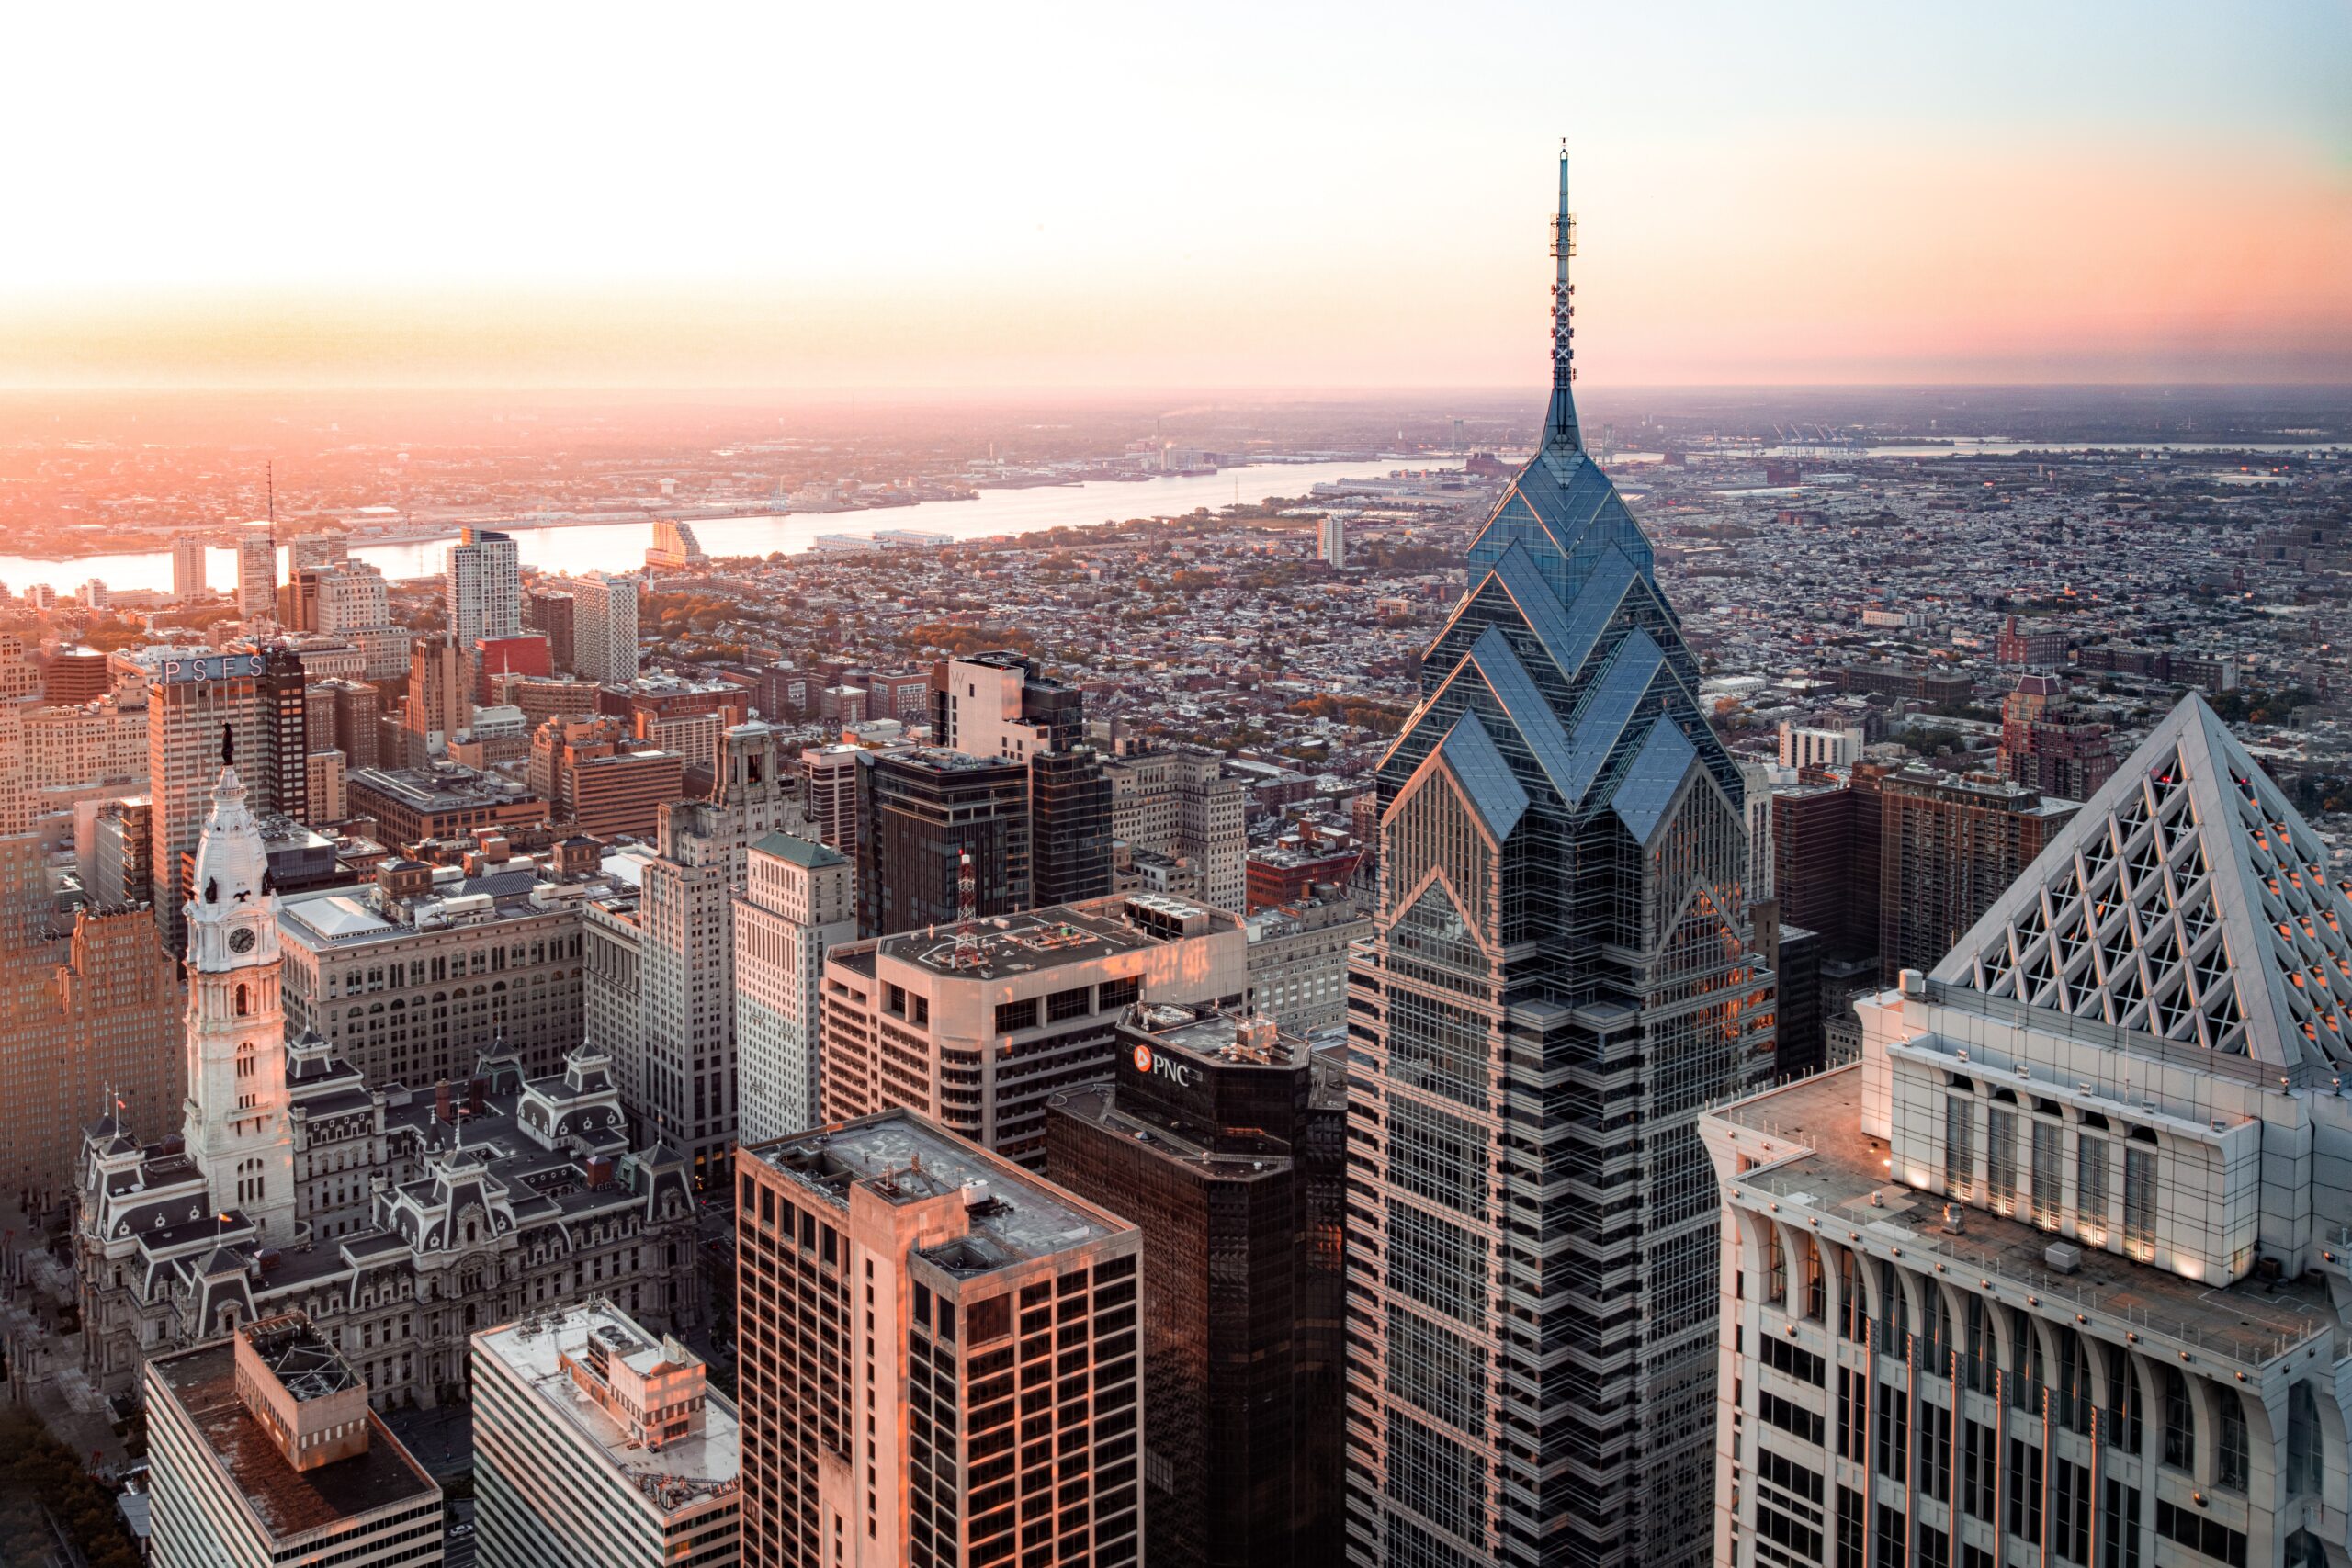 Stock Image of Philadelphia Skyline